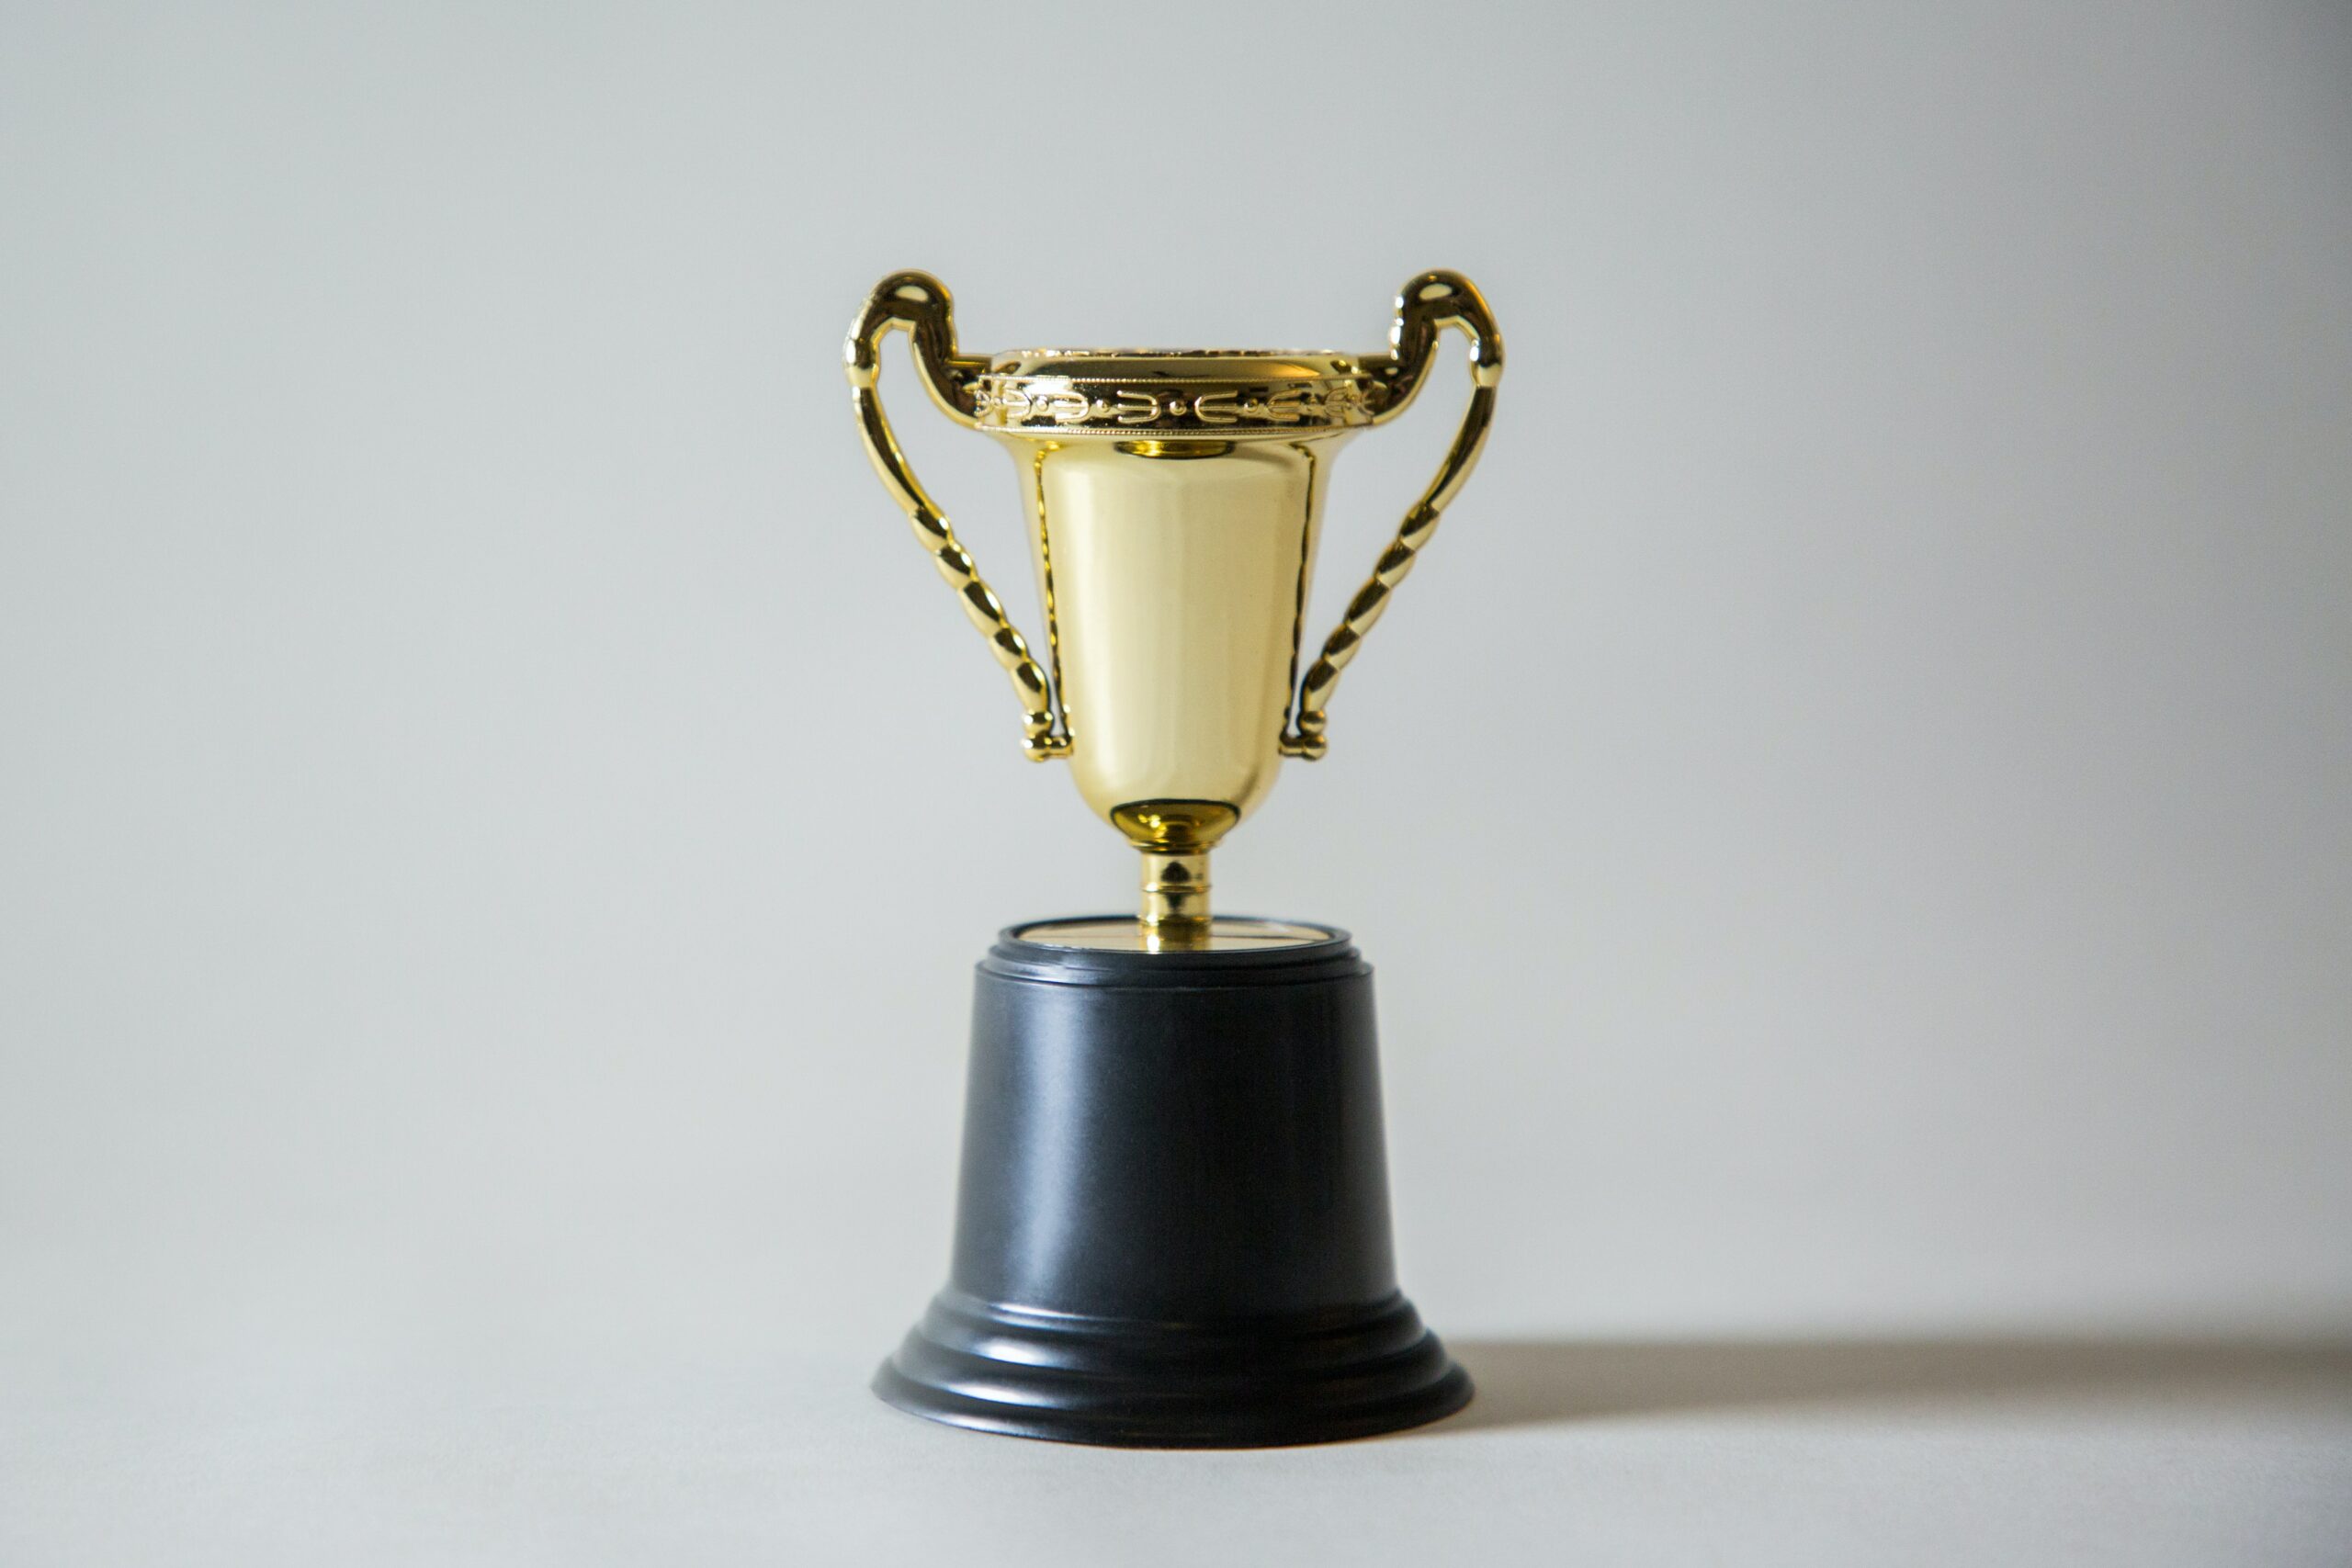 A golden trophy on a plain background